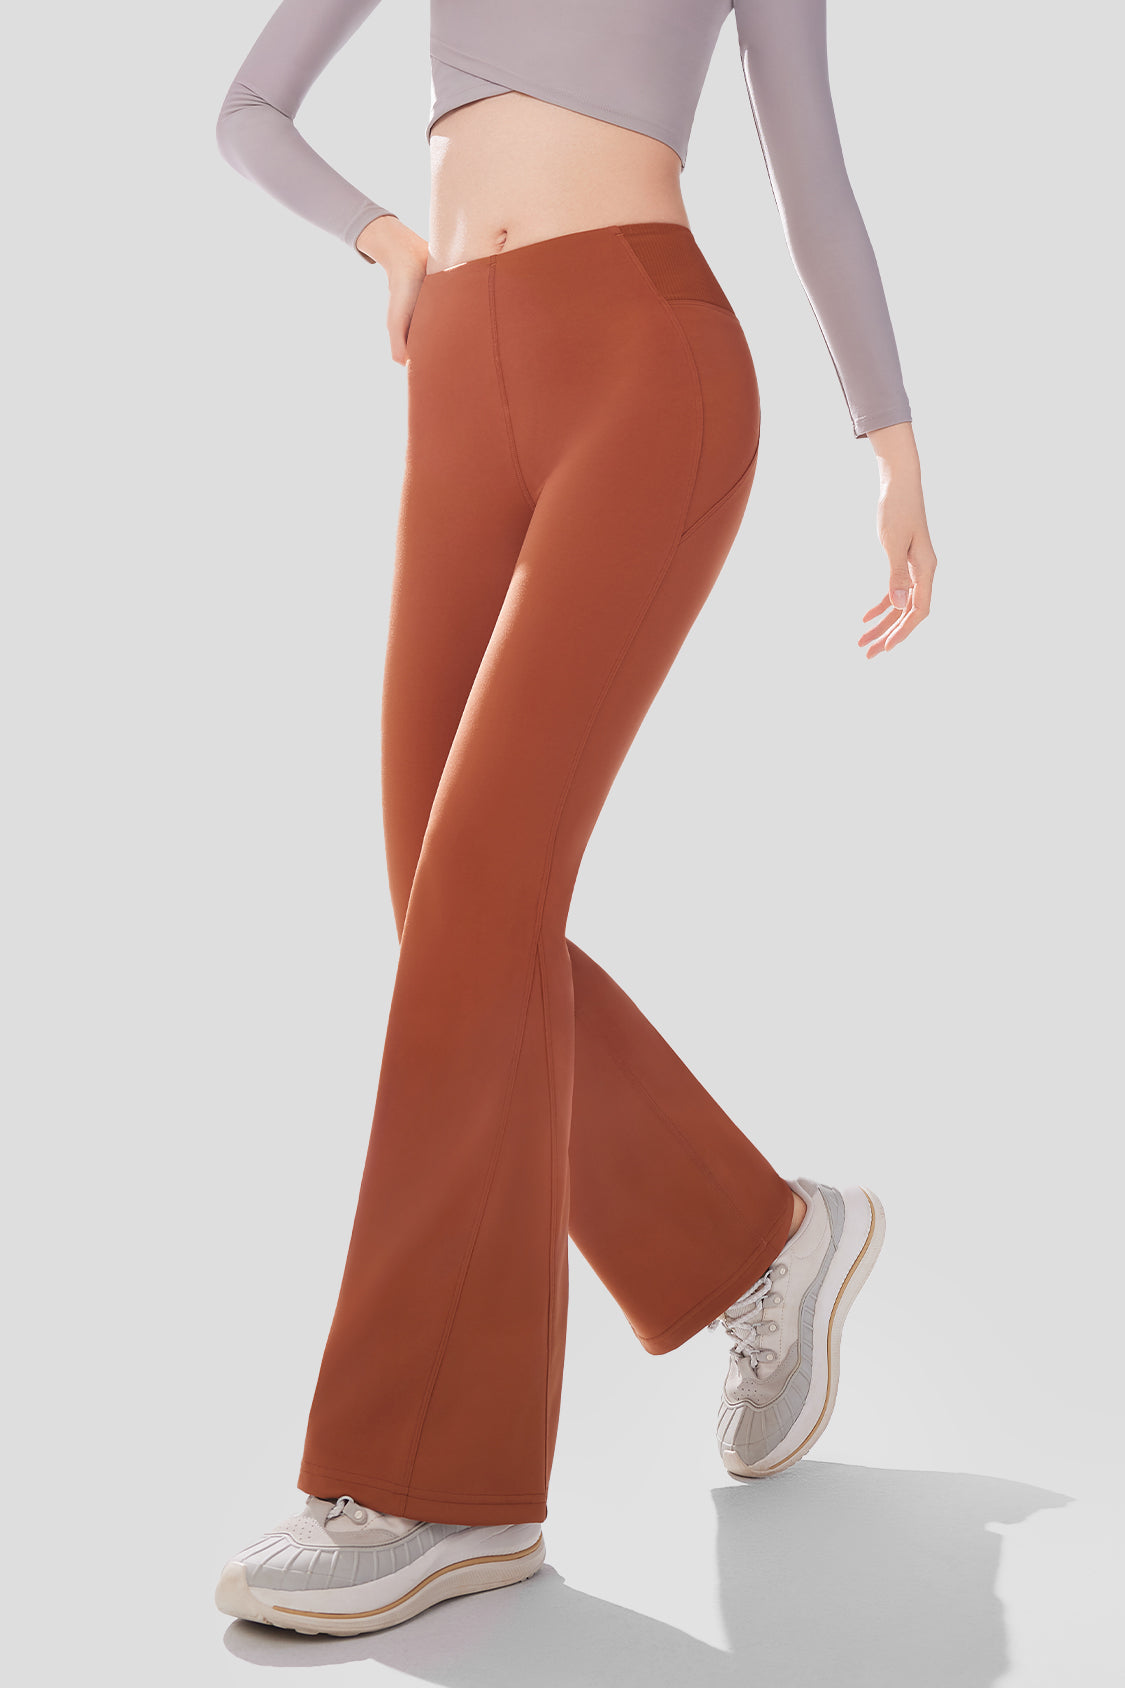 beneunder women's sun protection pants #color_warm orange brown